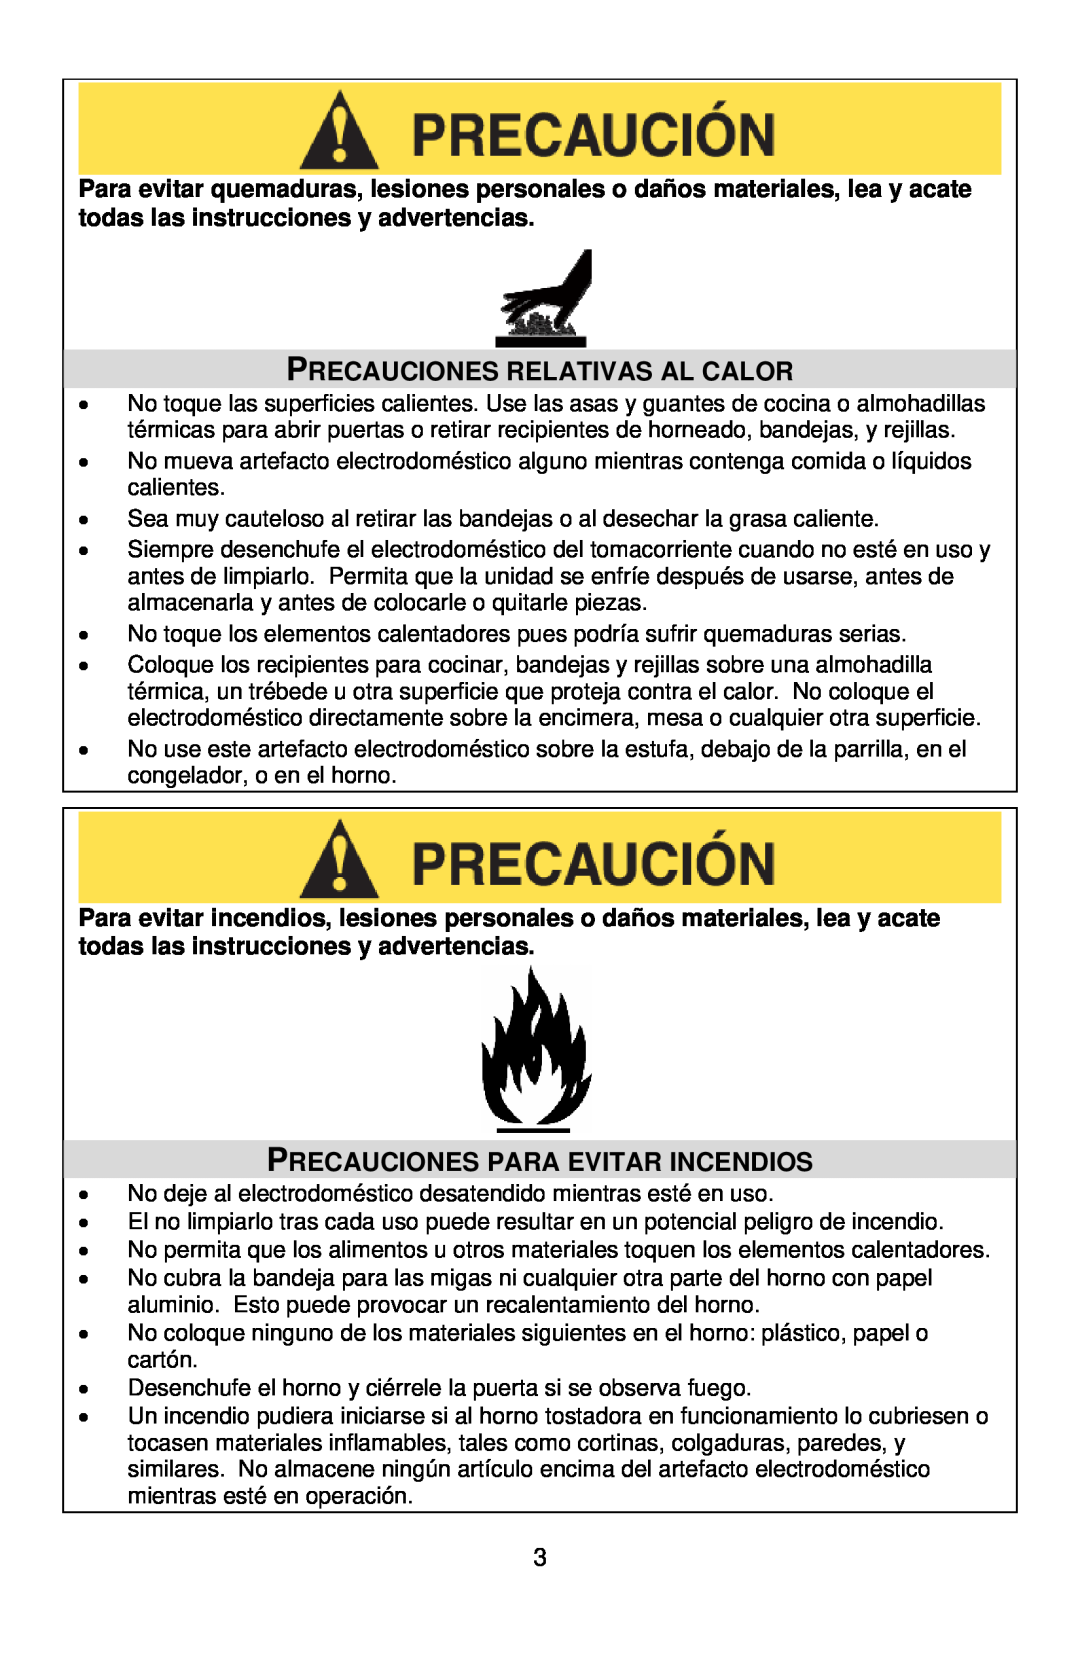 West Bend L5704, SHTO100 instruction manual Precauciones Relativas Al Calor, Precauciones Para Evitar Incendios 